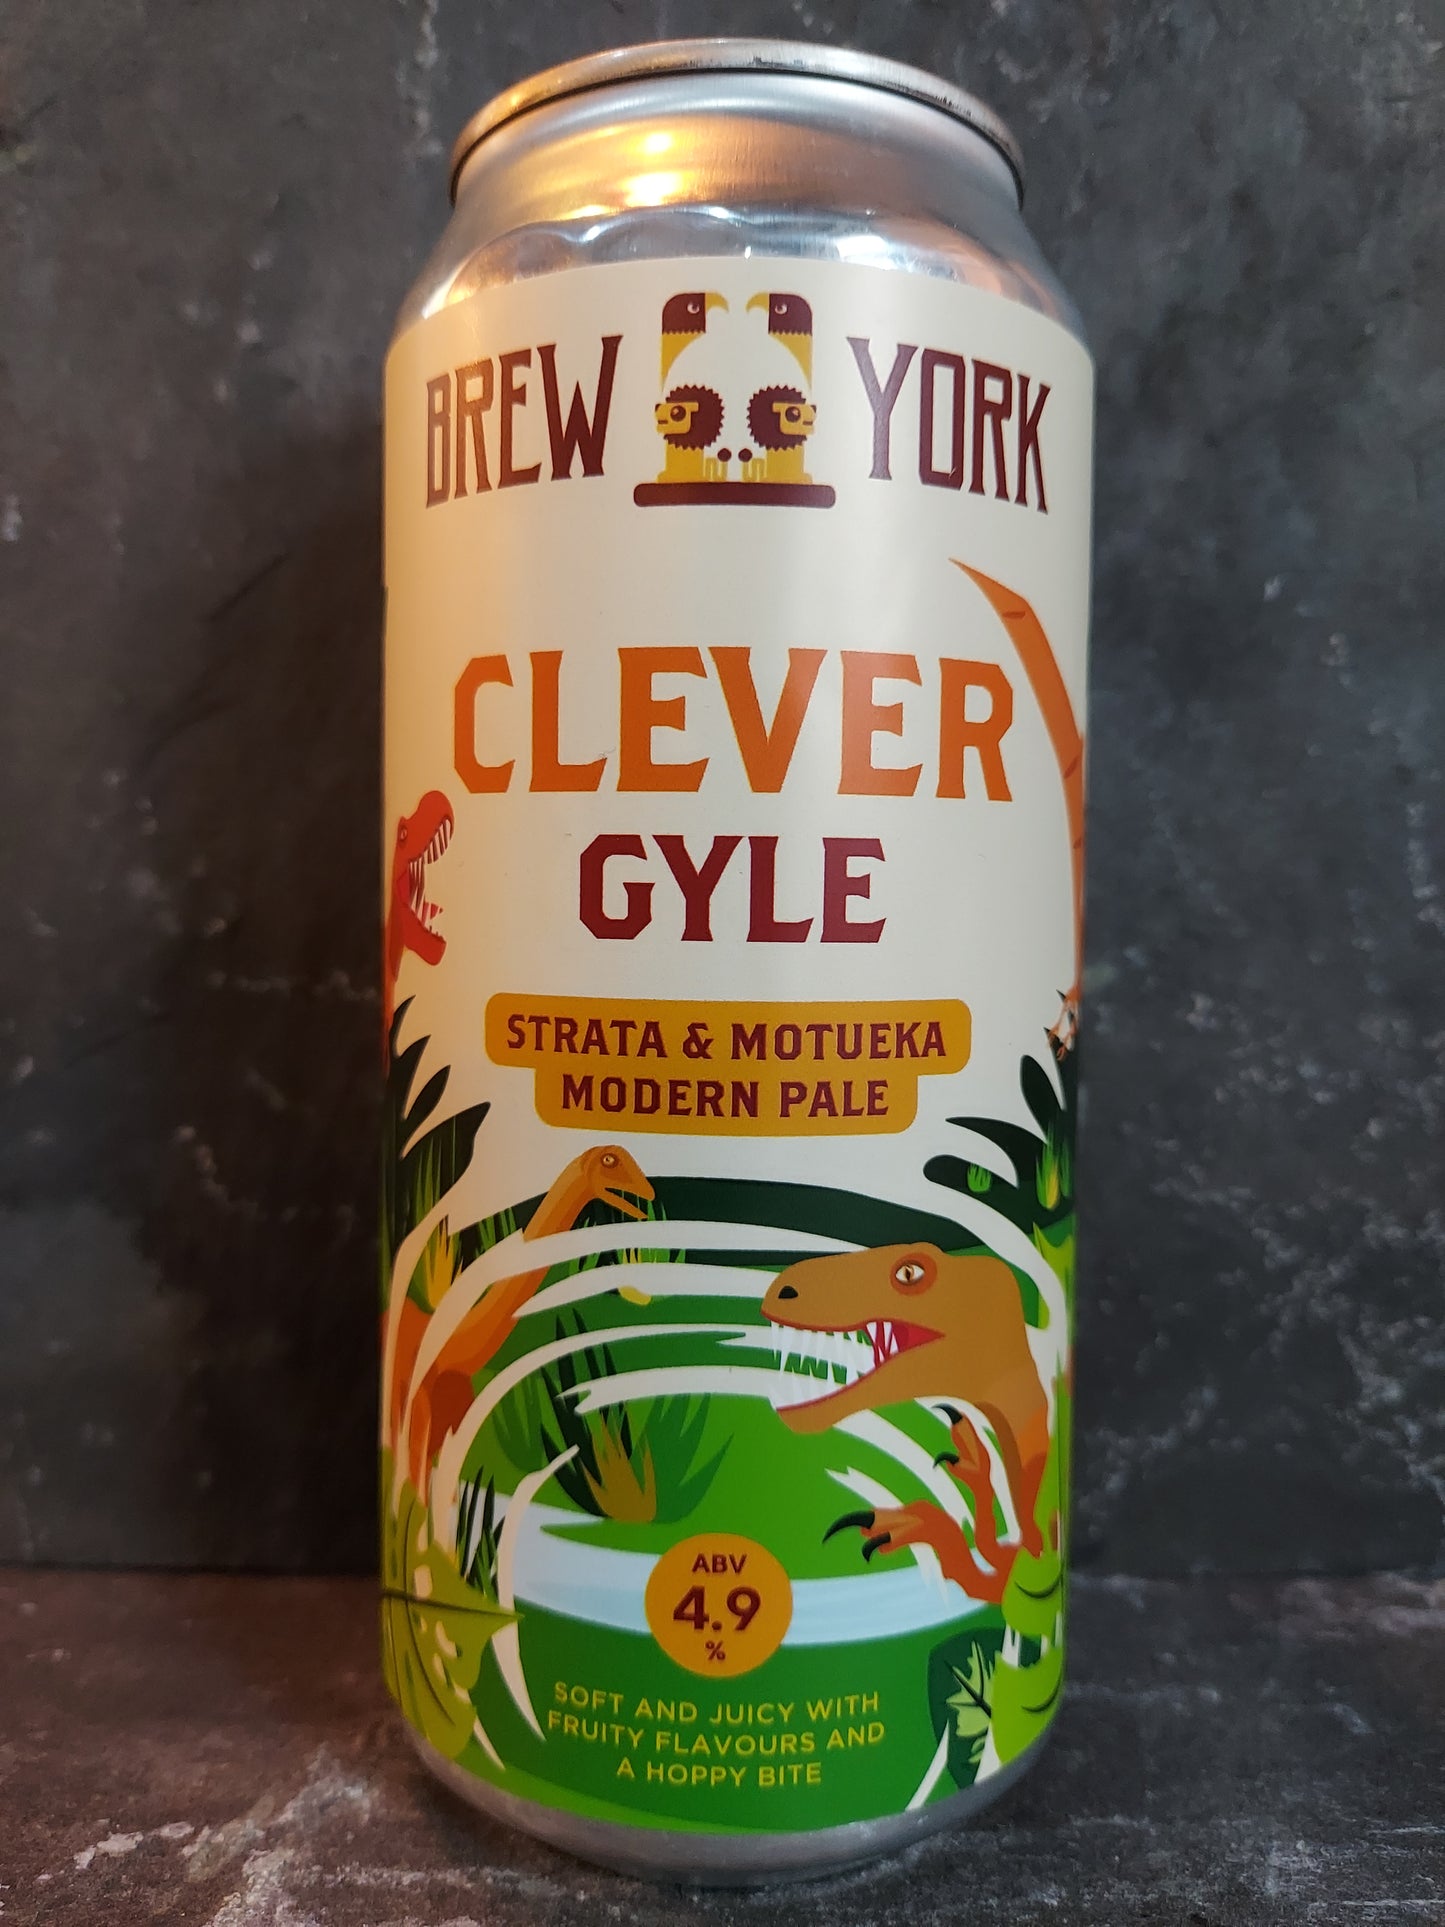 Clever Gyle - Brew York